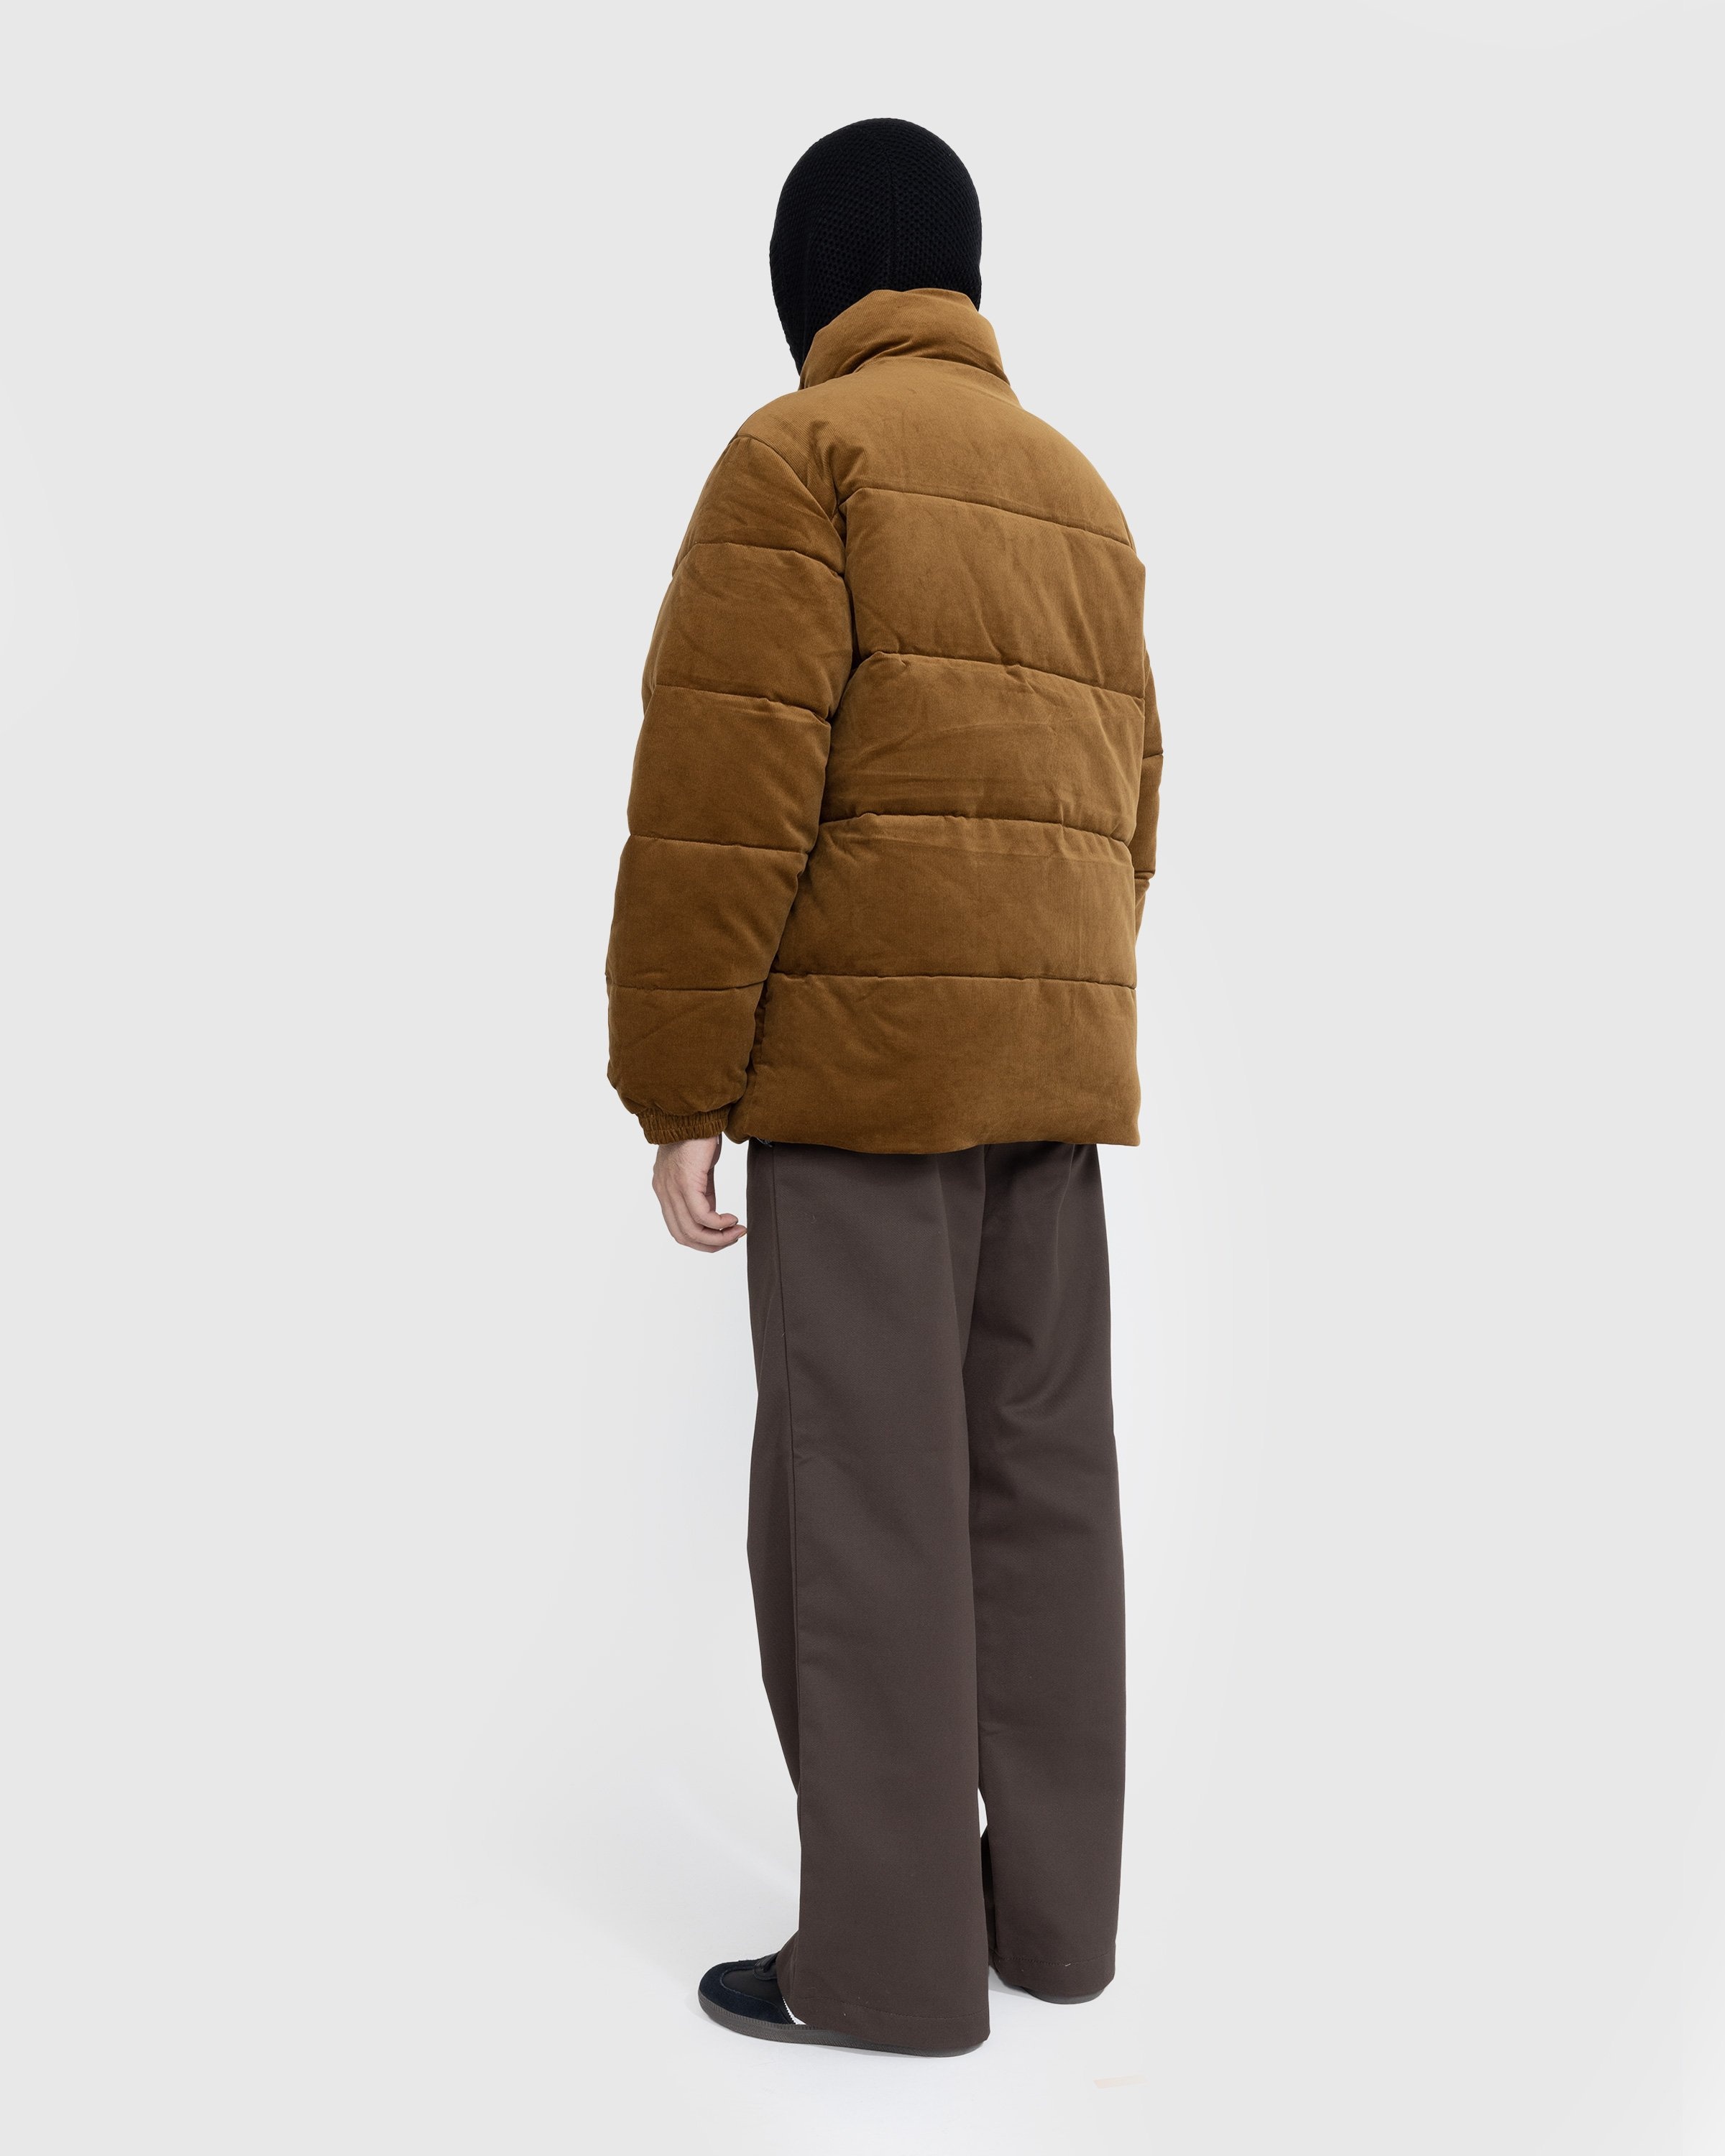 Carhartt WIP – Layton Jacket Deep Hamilton Brown - Outerwear - Brown - Image 3